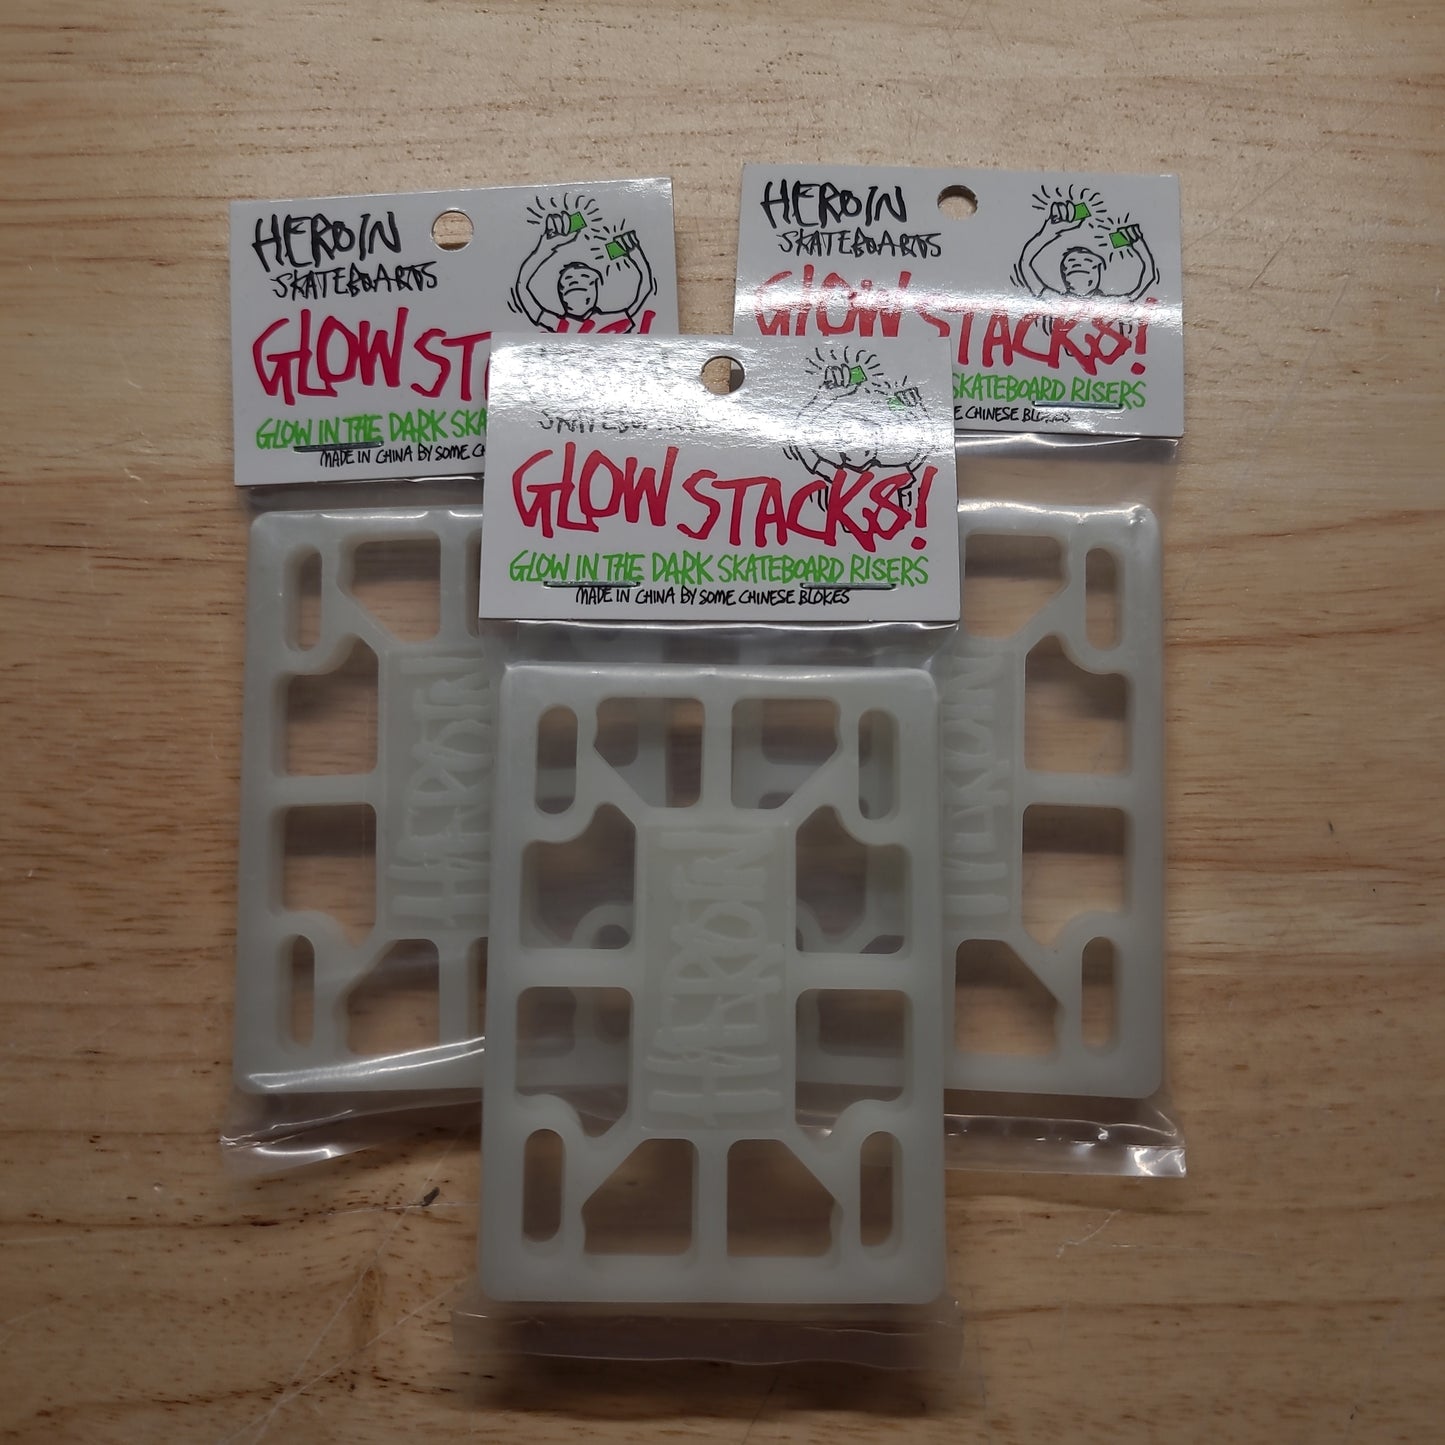 Heroin - Glow Stacks! 1/8" Risers